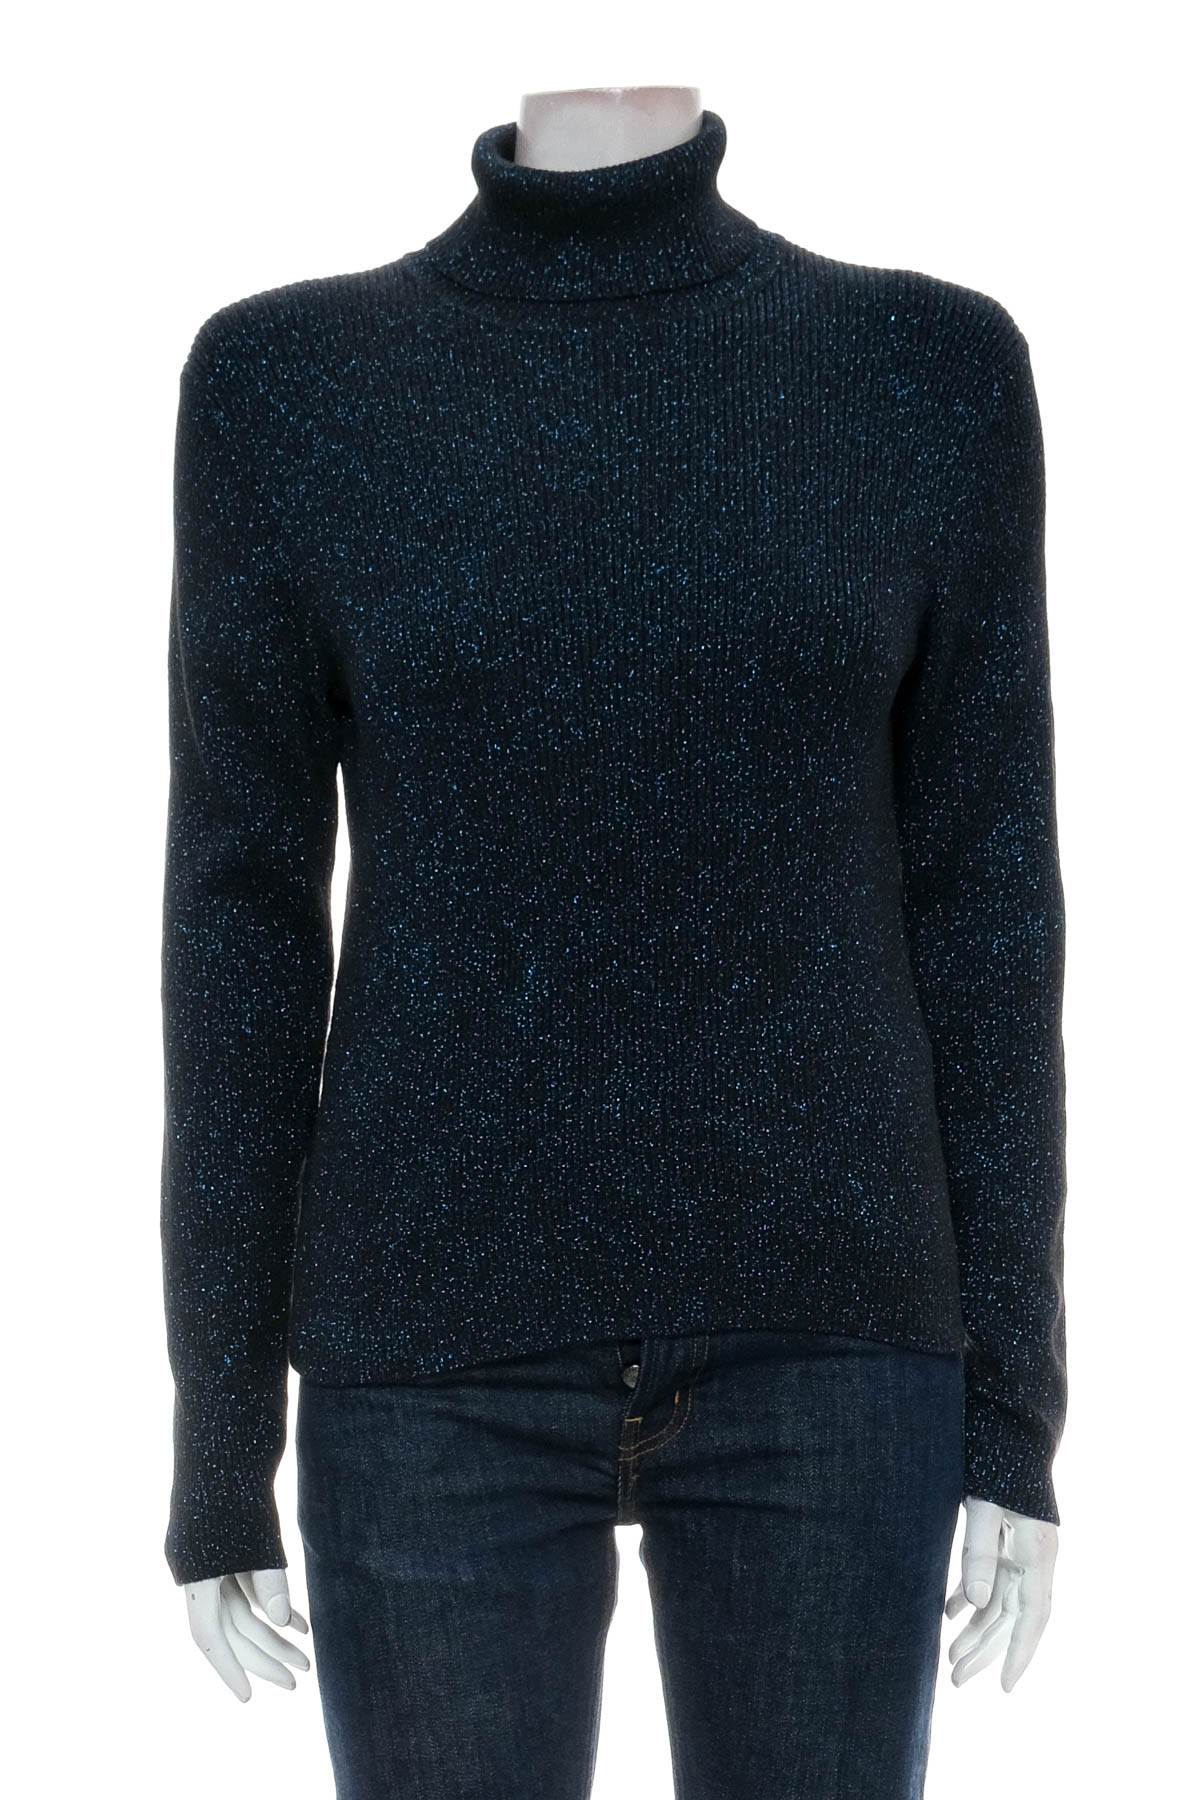 Women's sweater - Rena Rowan - 0